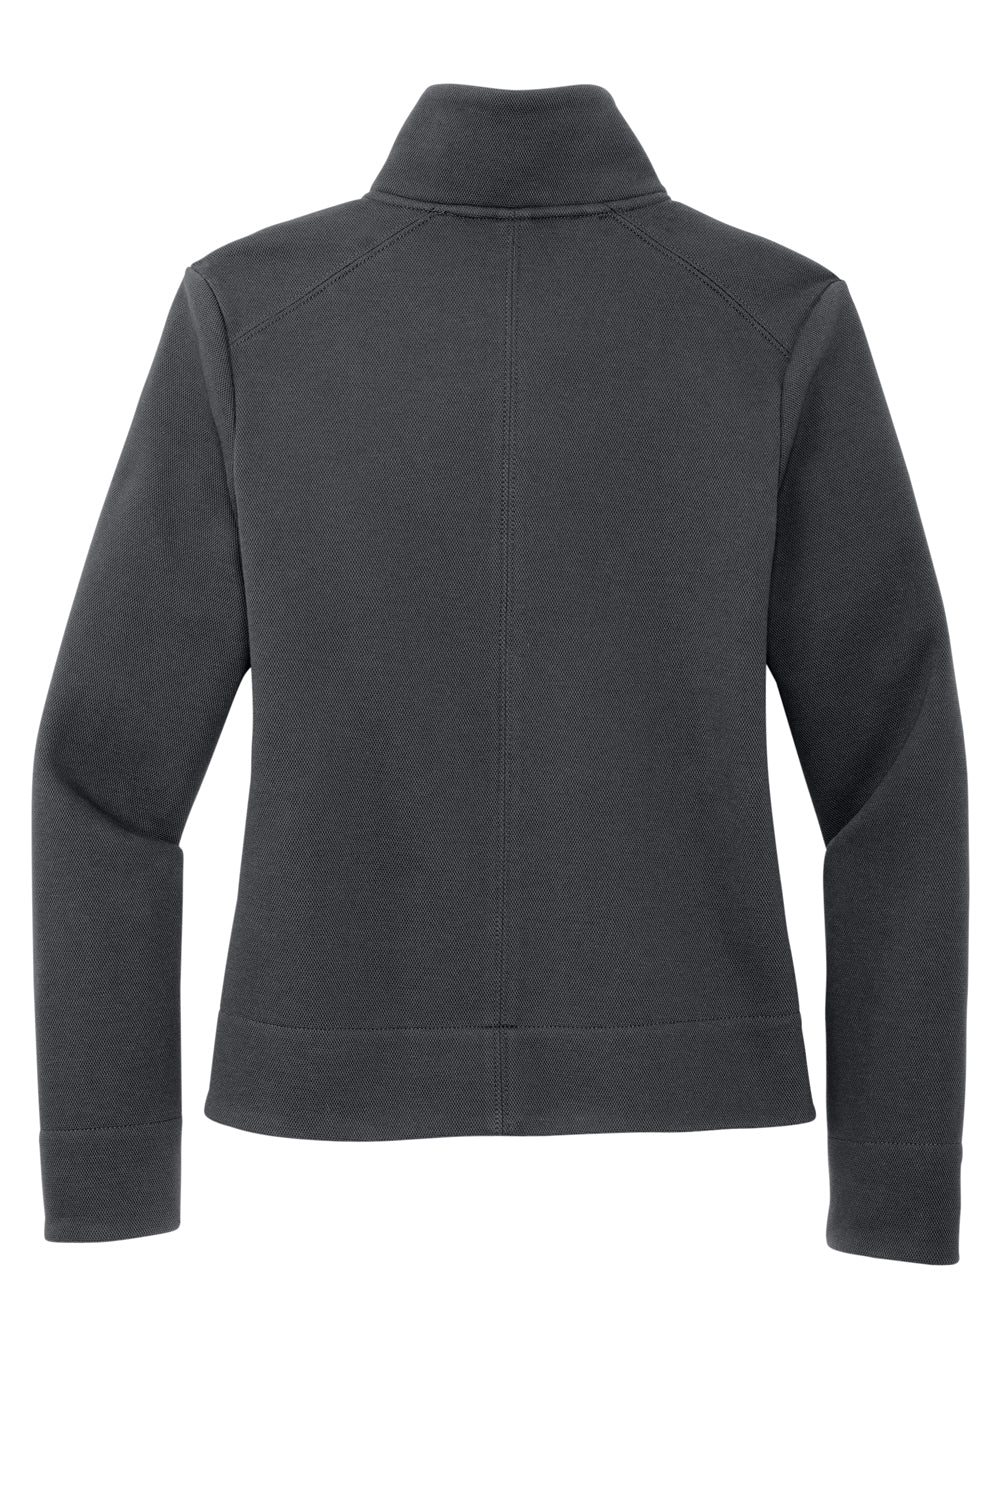 Port Authority L422 Womens Network Fleece Full Zip Jacket Charcoal Grey Flat Back